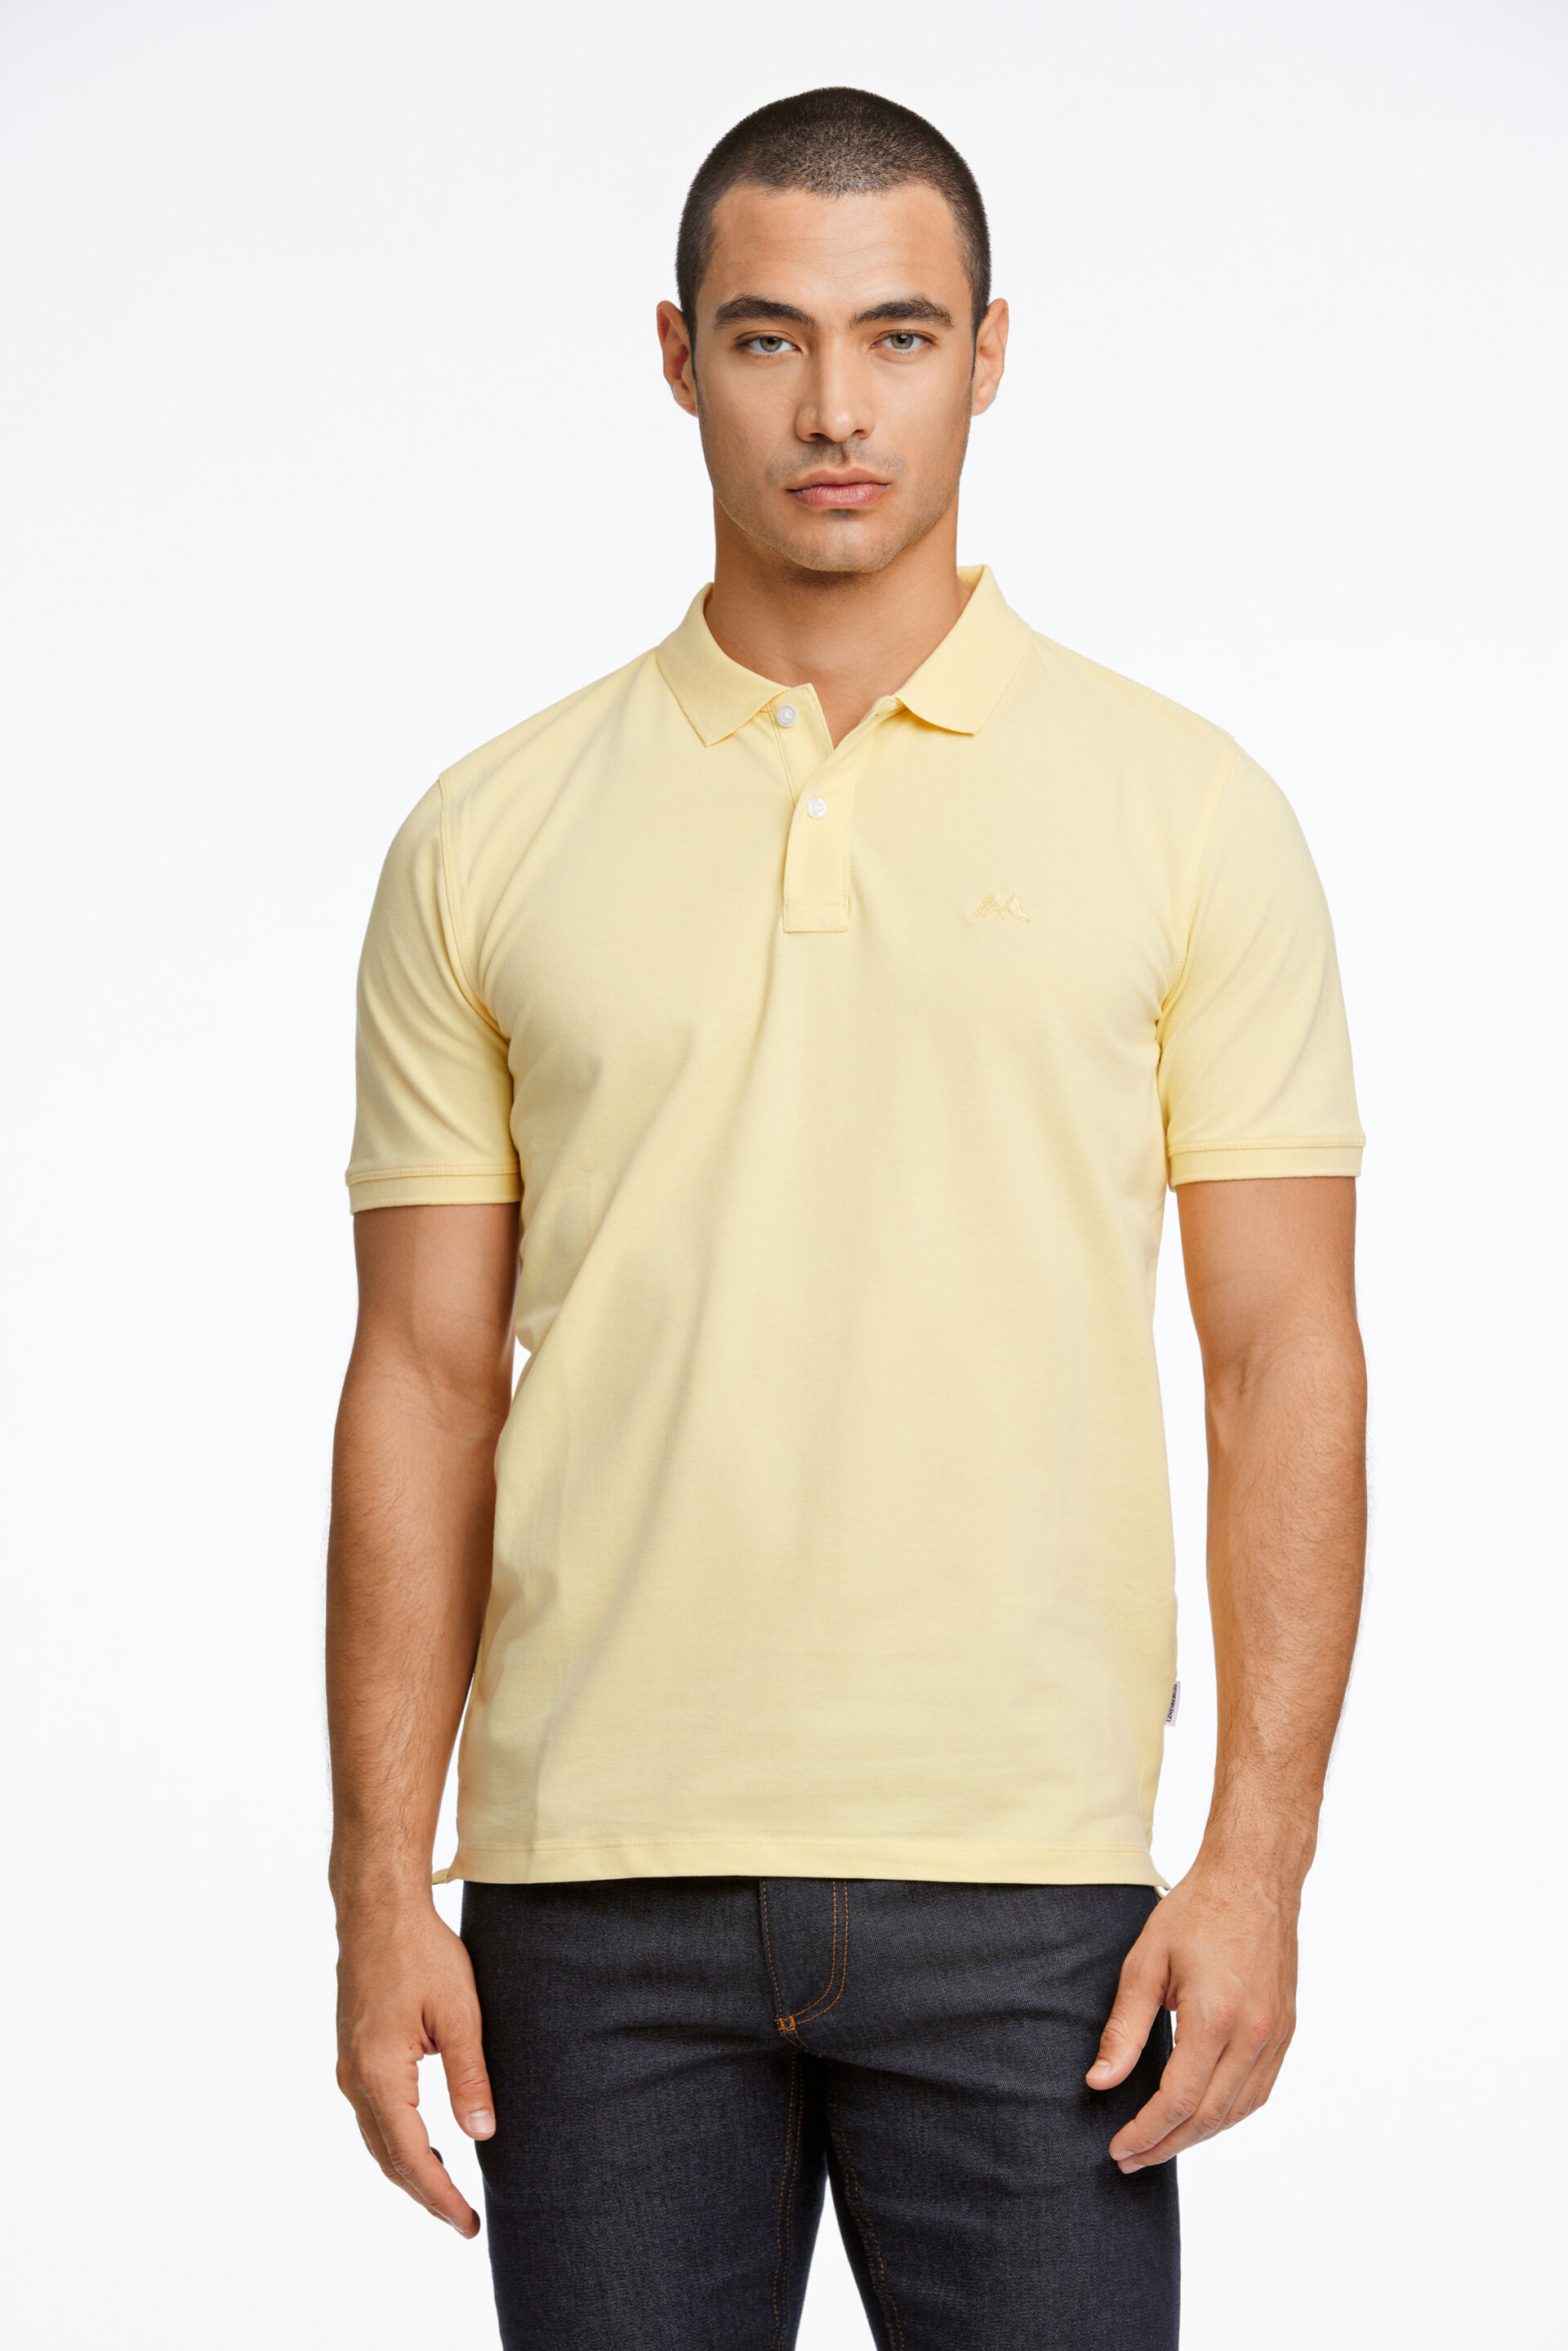 Polo shirt Polo shirt Yellow 30-404016